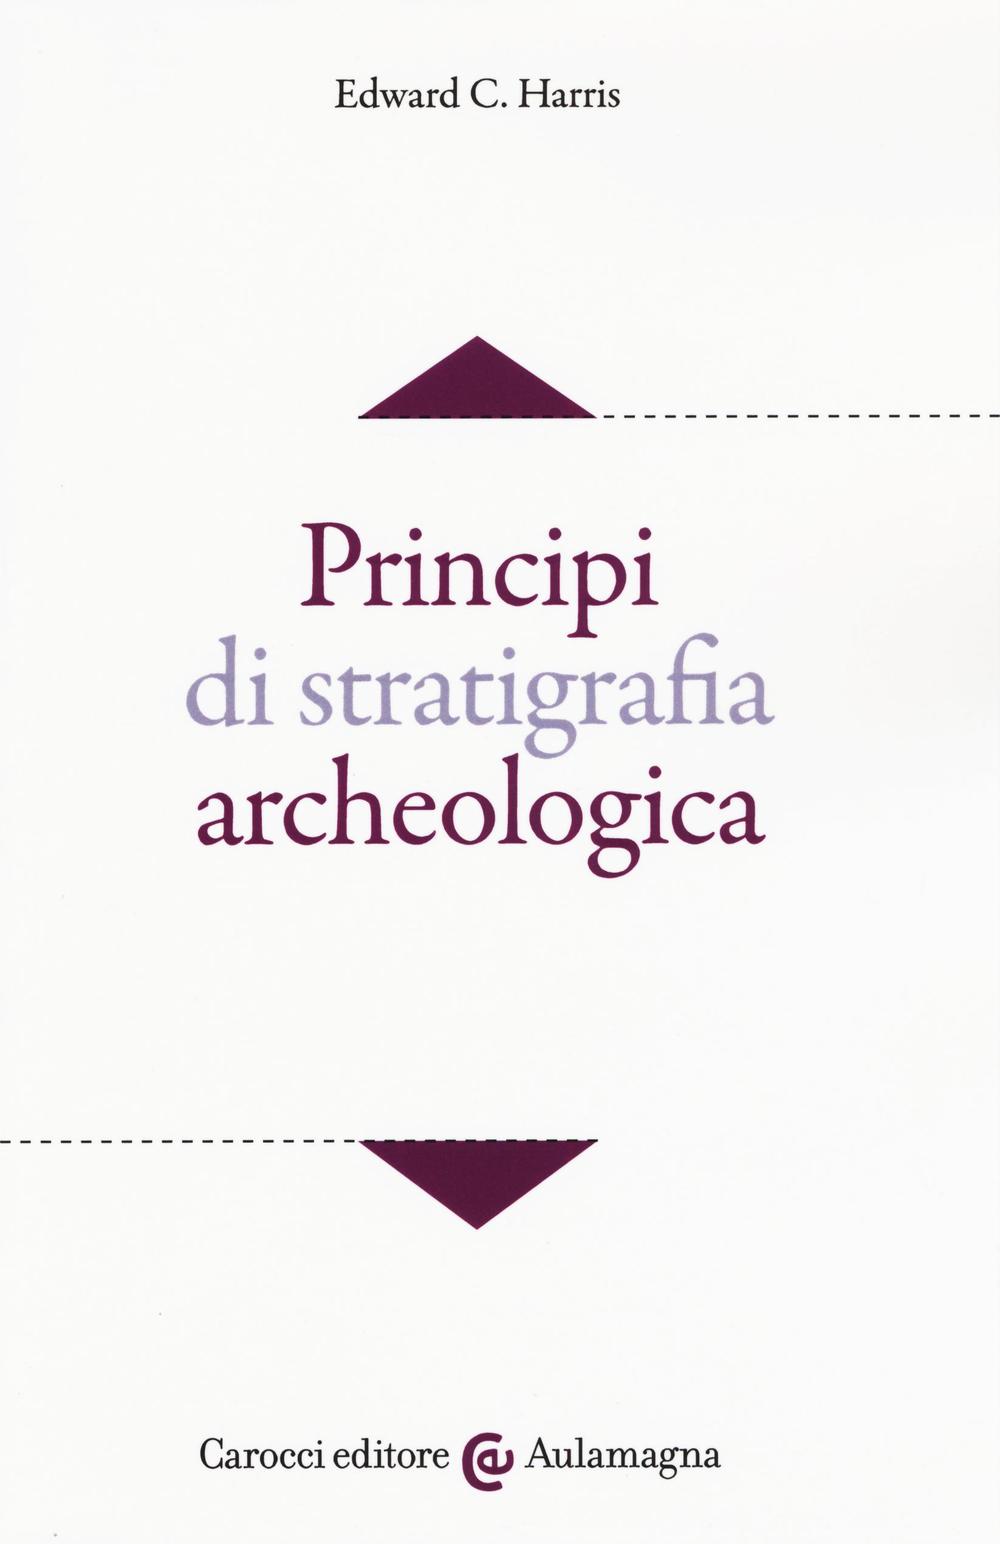 Книга Principi di stratigrafia archeologica Edward C. Harris